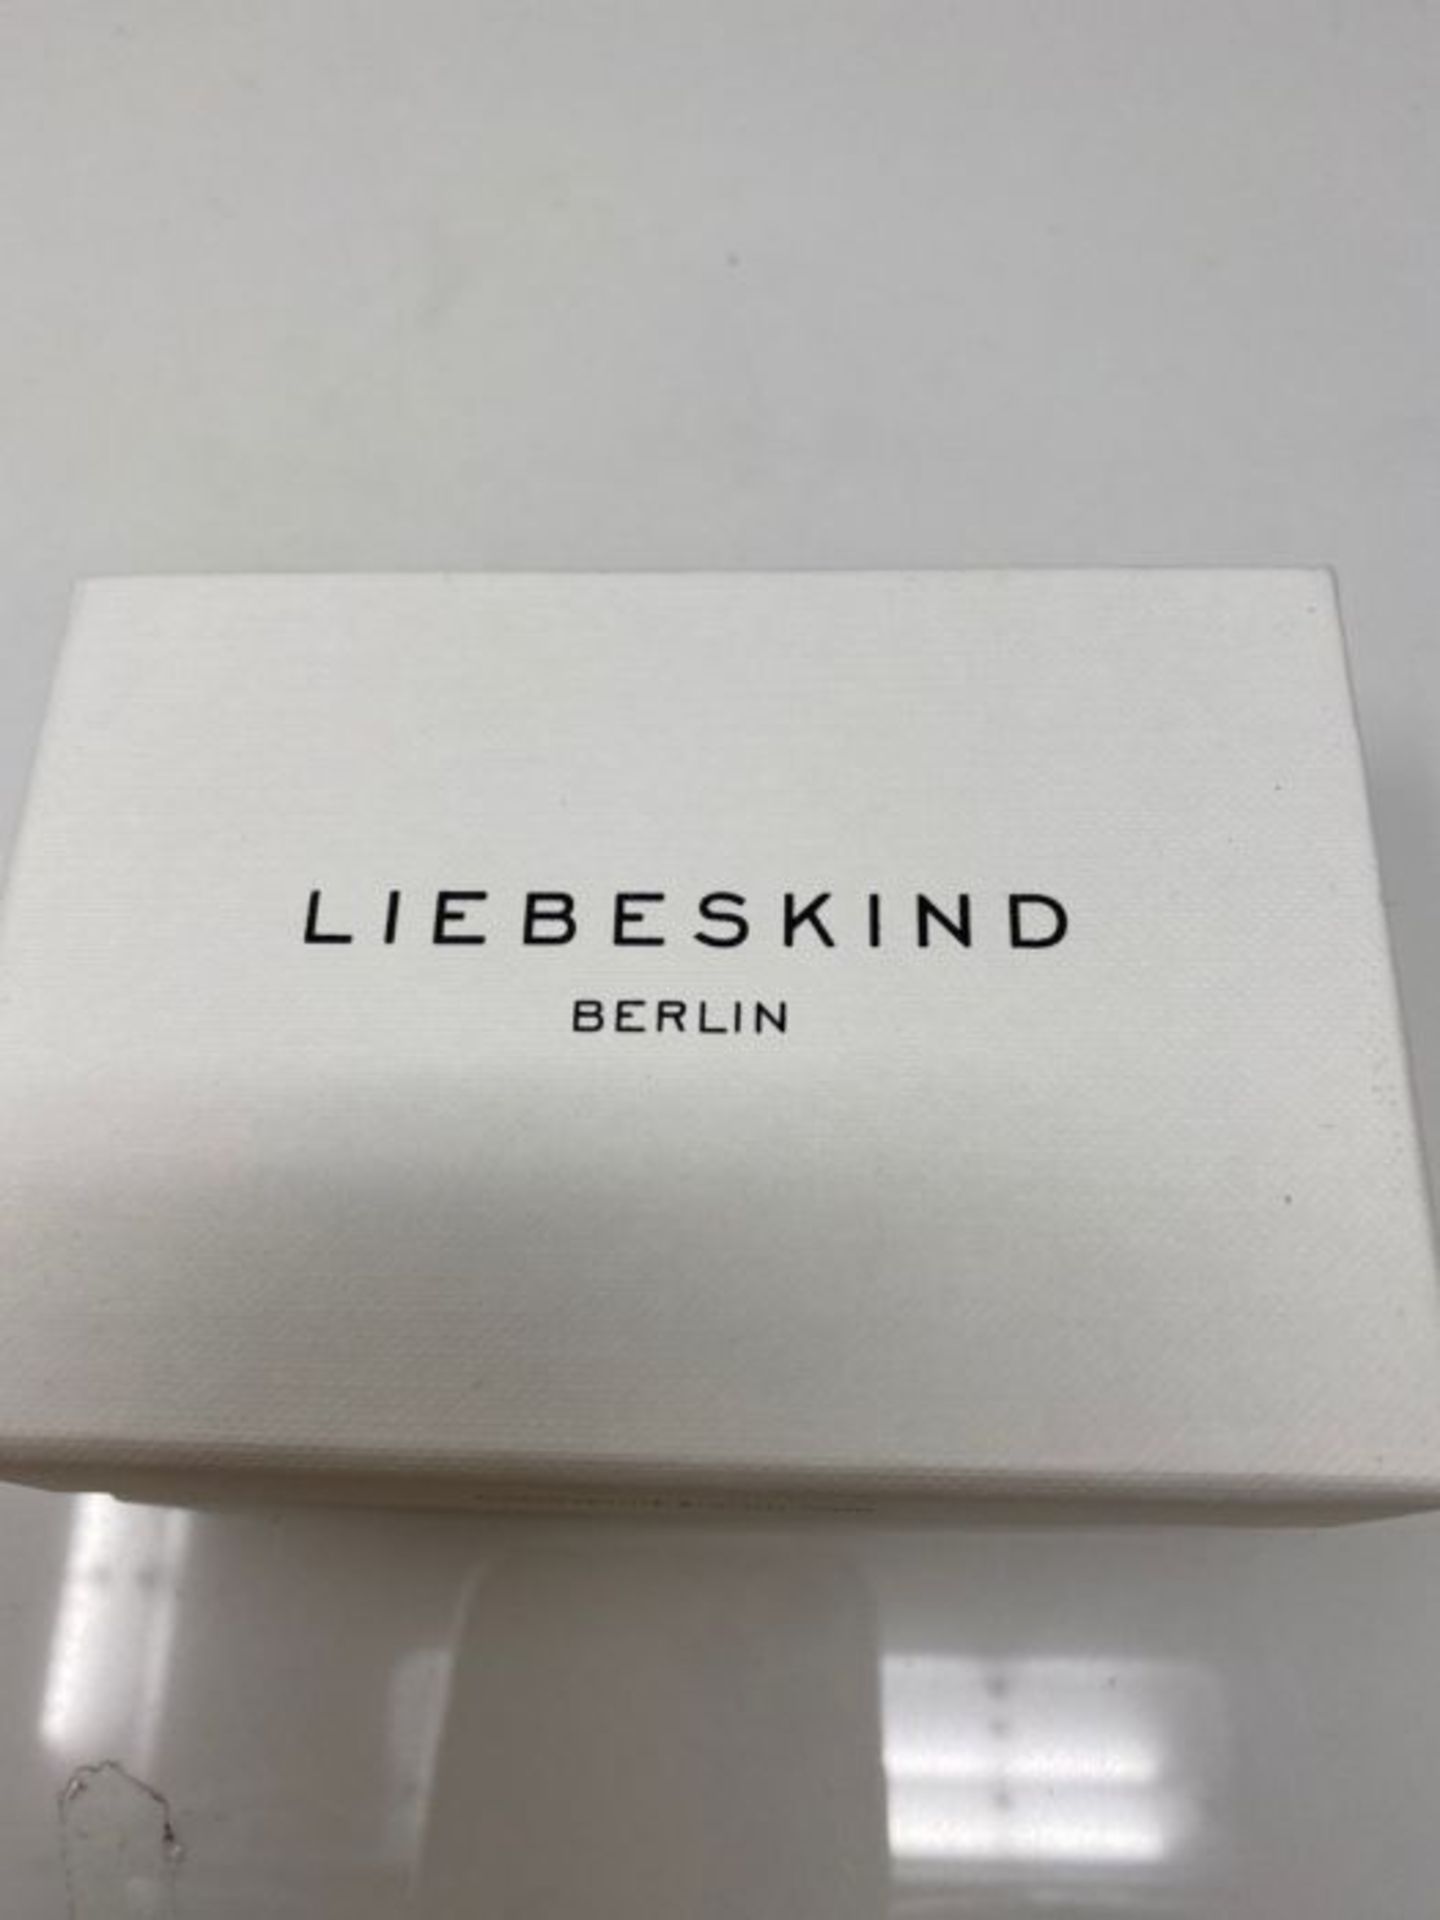 Liebeskind Women's Bracelet Heart Stainless Steel Silver 20 cm, 20 cm, Stainless Steel - Image 2 of 3